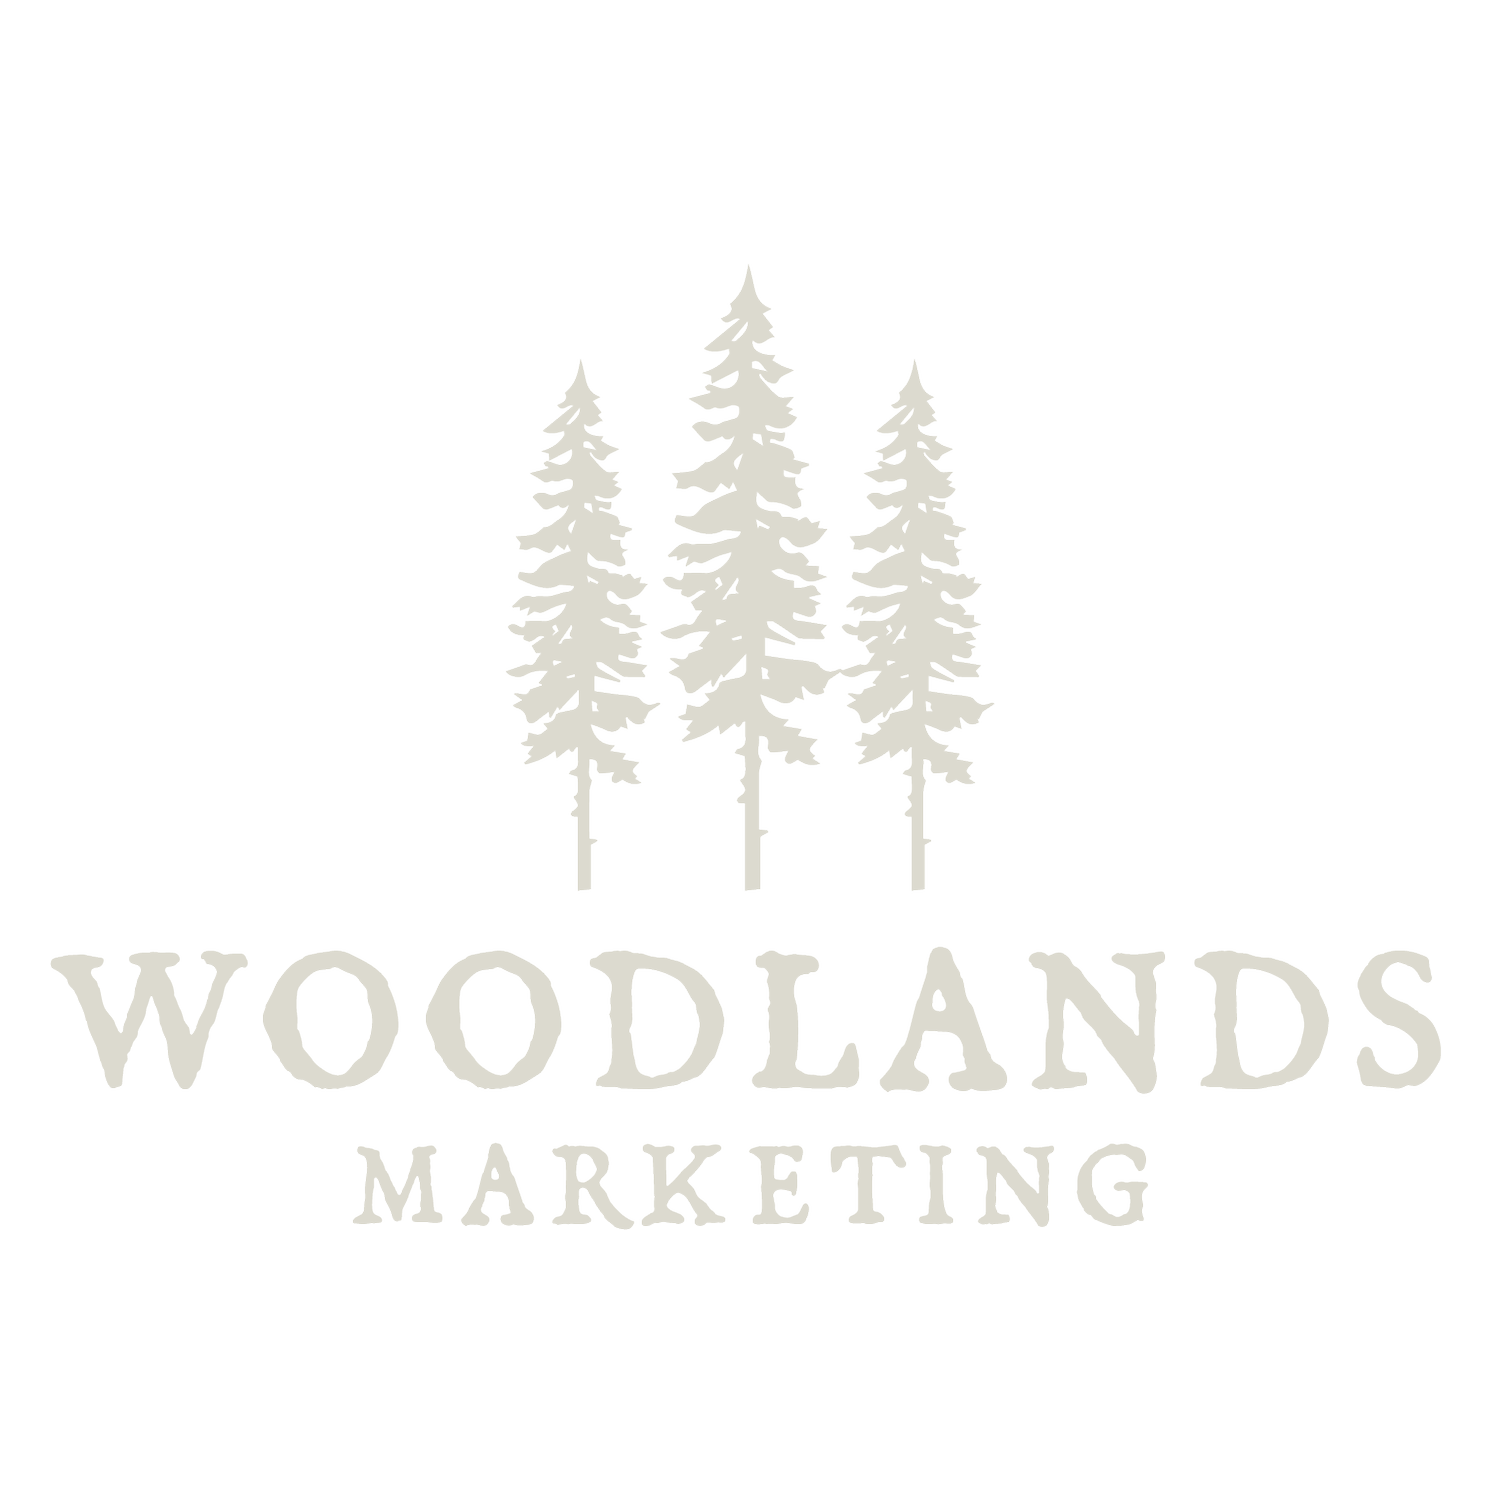 Woodlands Marketing: Marketing for Outdoor Businesses